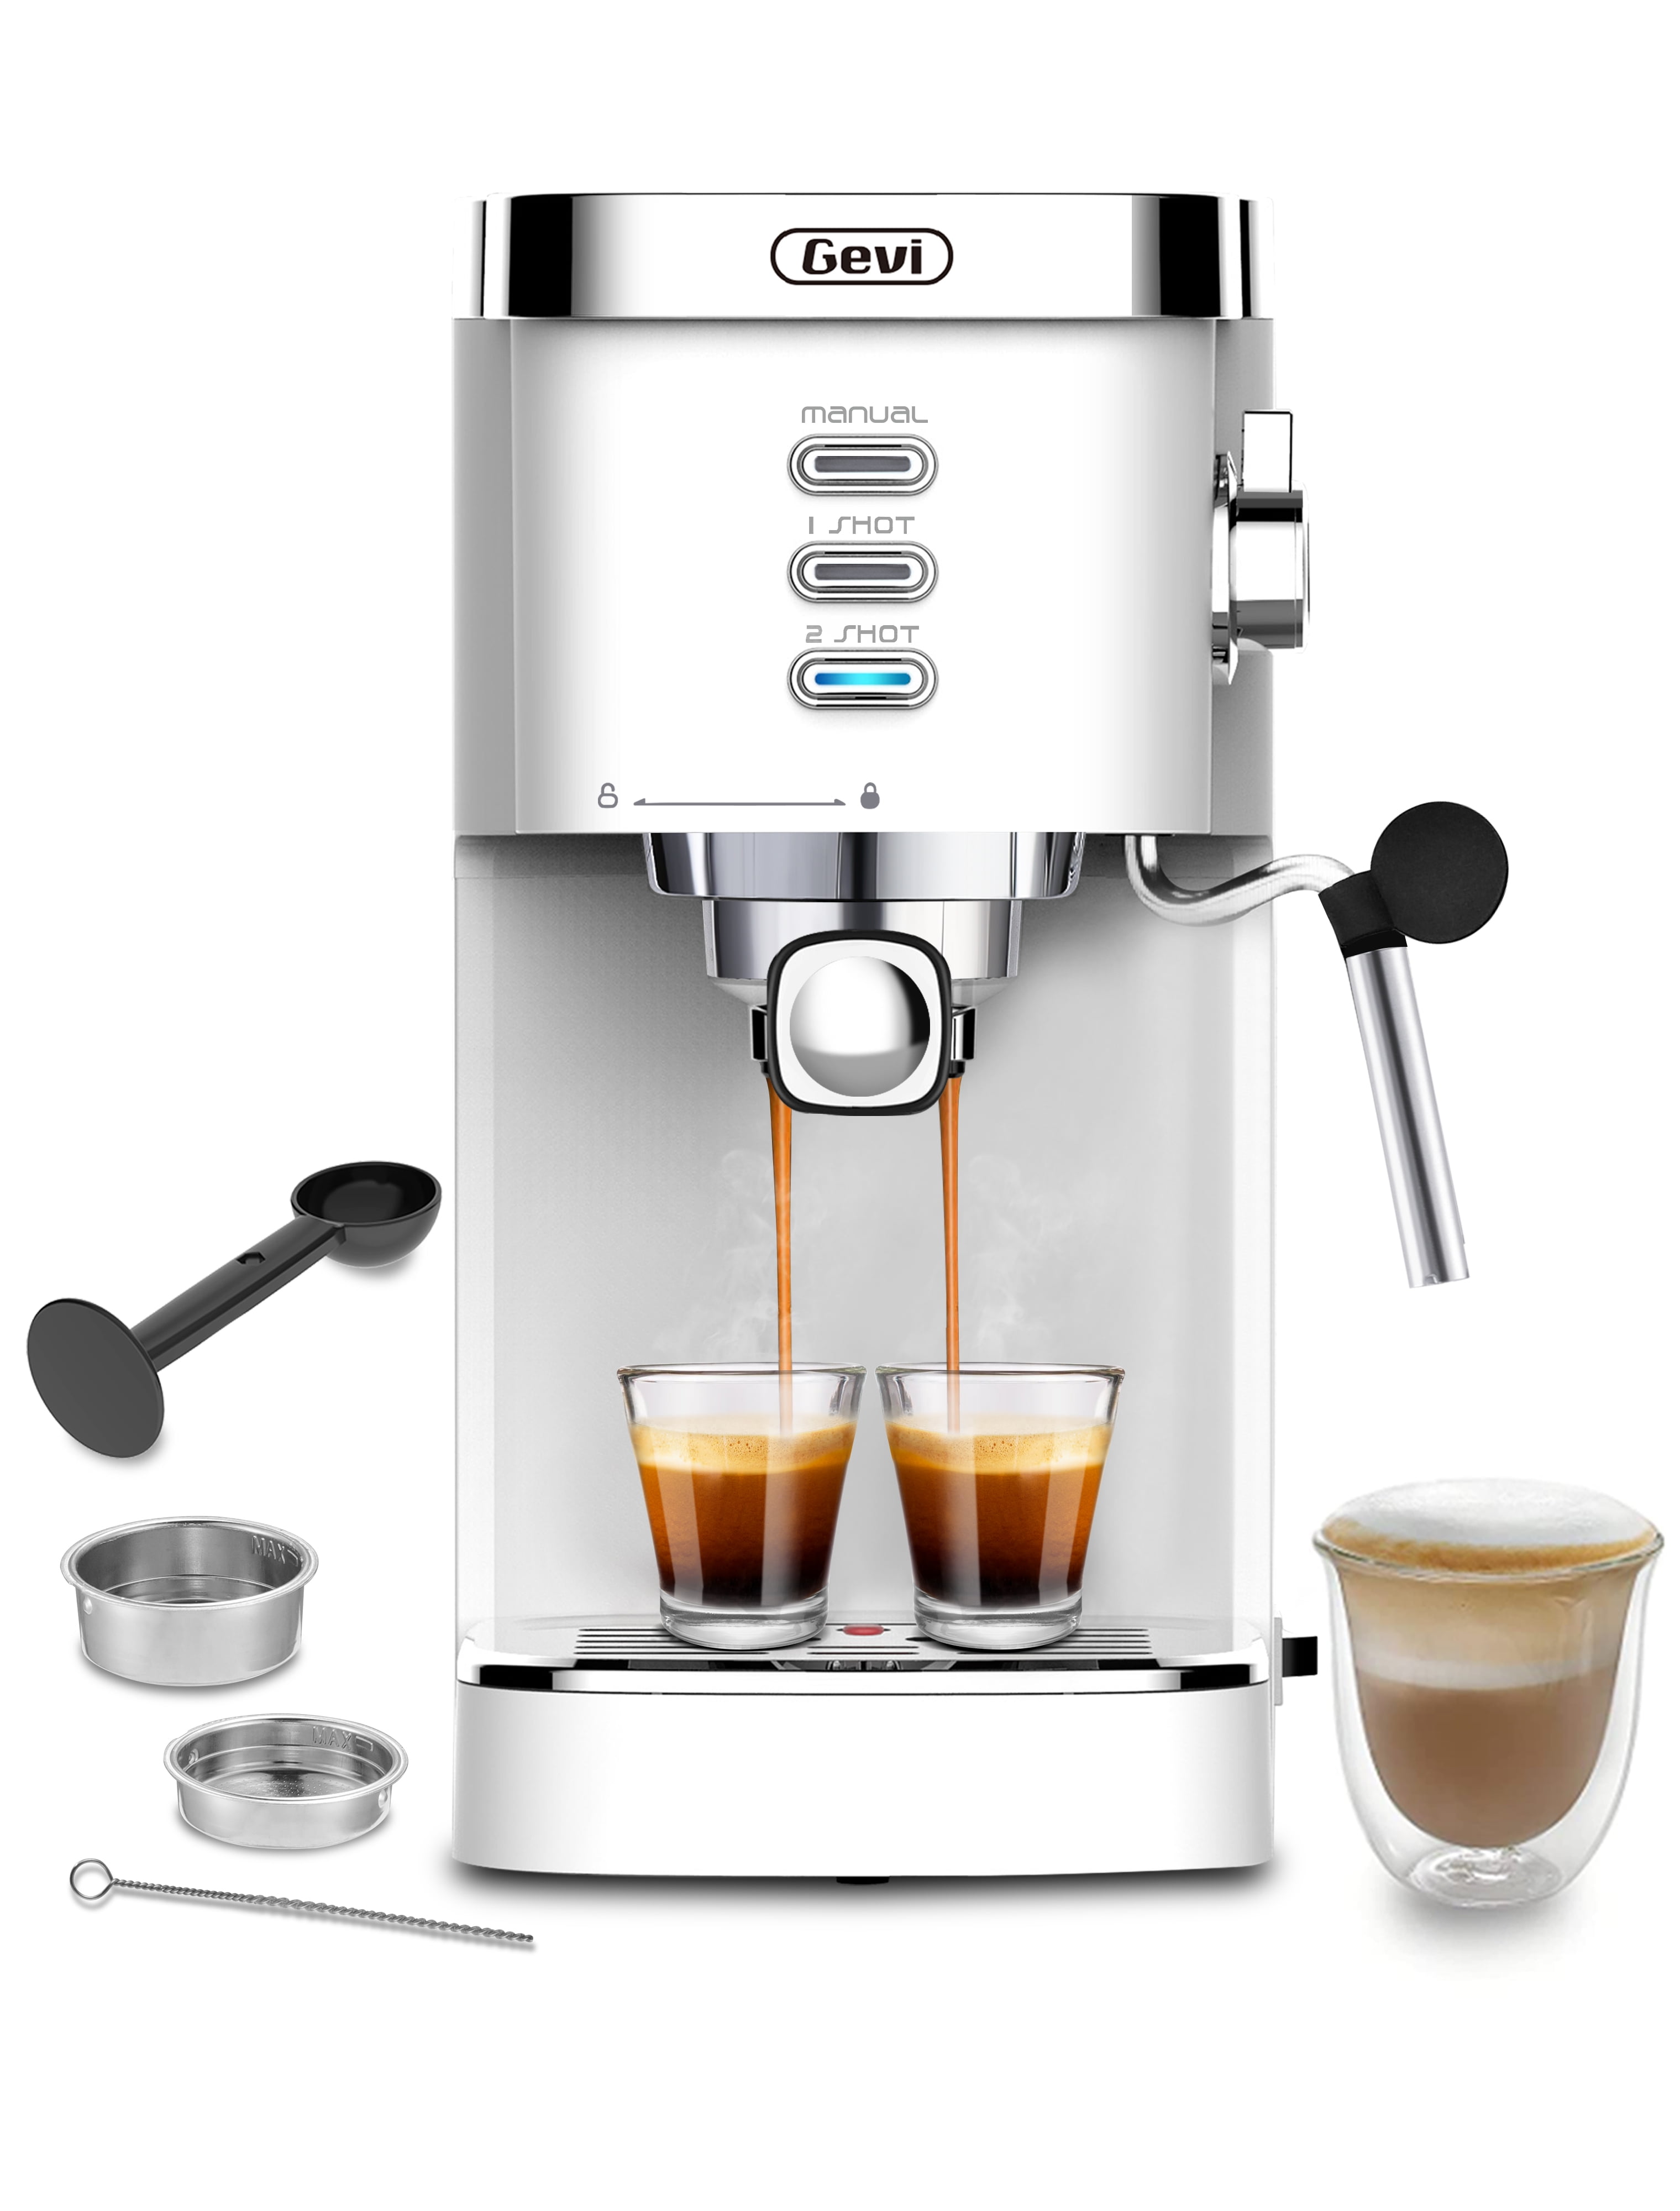 Gevi Espresso Machine with steamer … curated on LTK